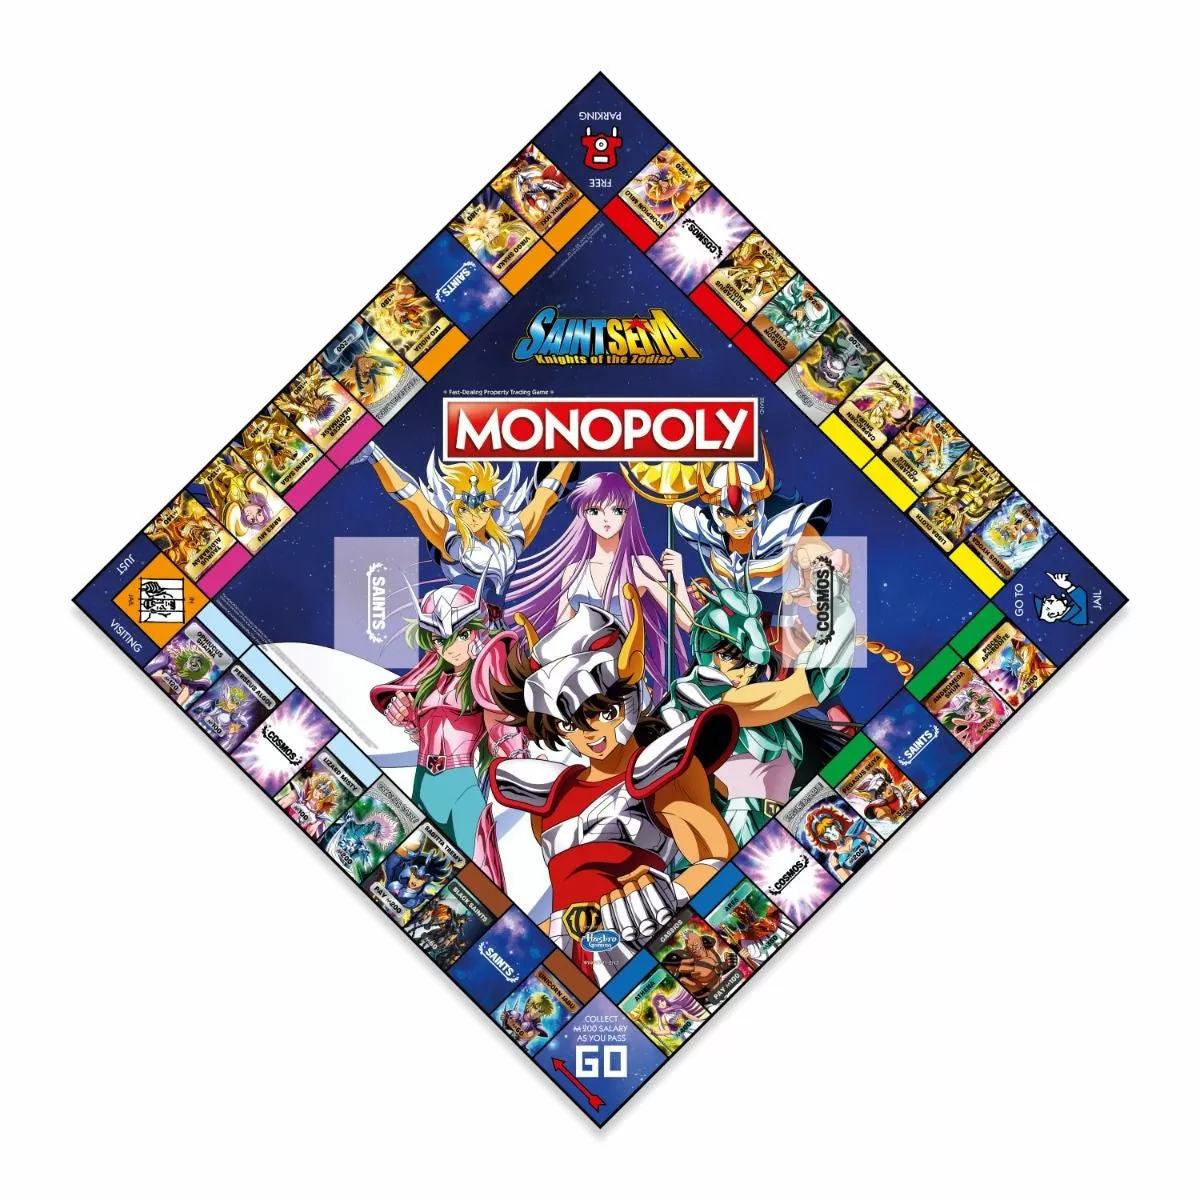 WINWM01791 Monopoly - Saint Seiya Edition - Winning Moves - Titan Pop Culture